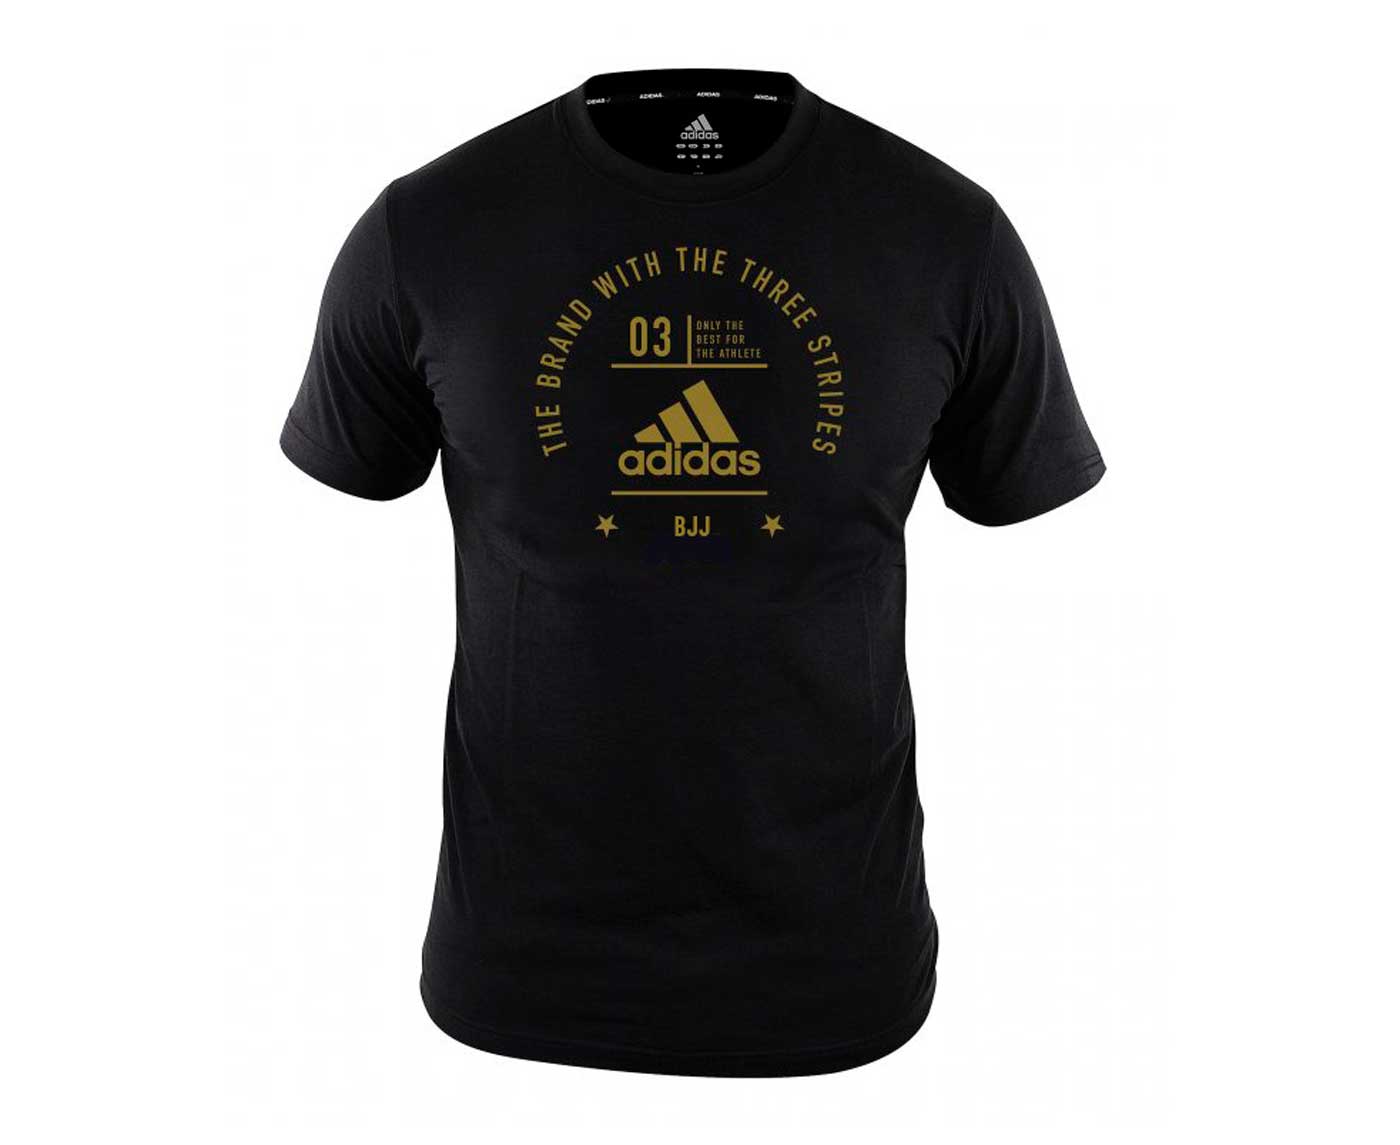 Футболка The Brand With The Three Stripes T-Shirt BJJ черно-золотая